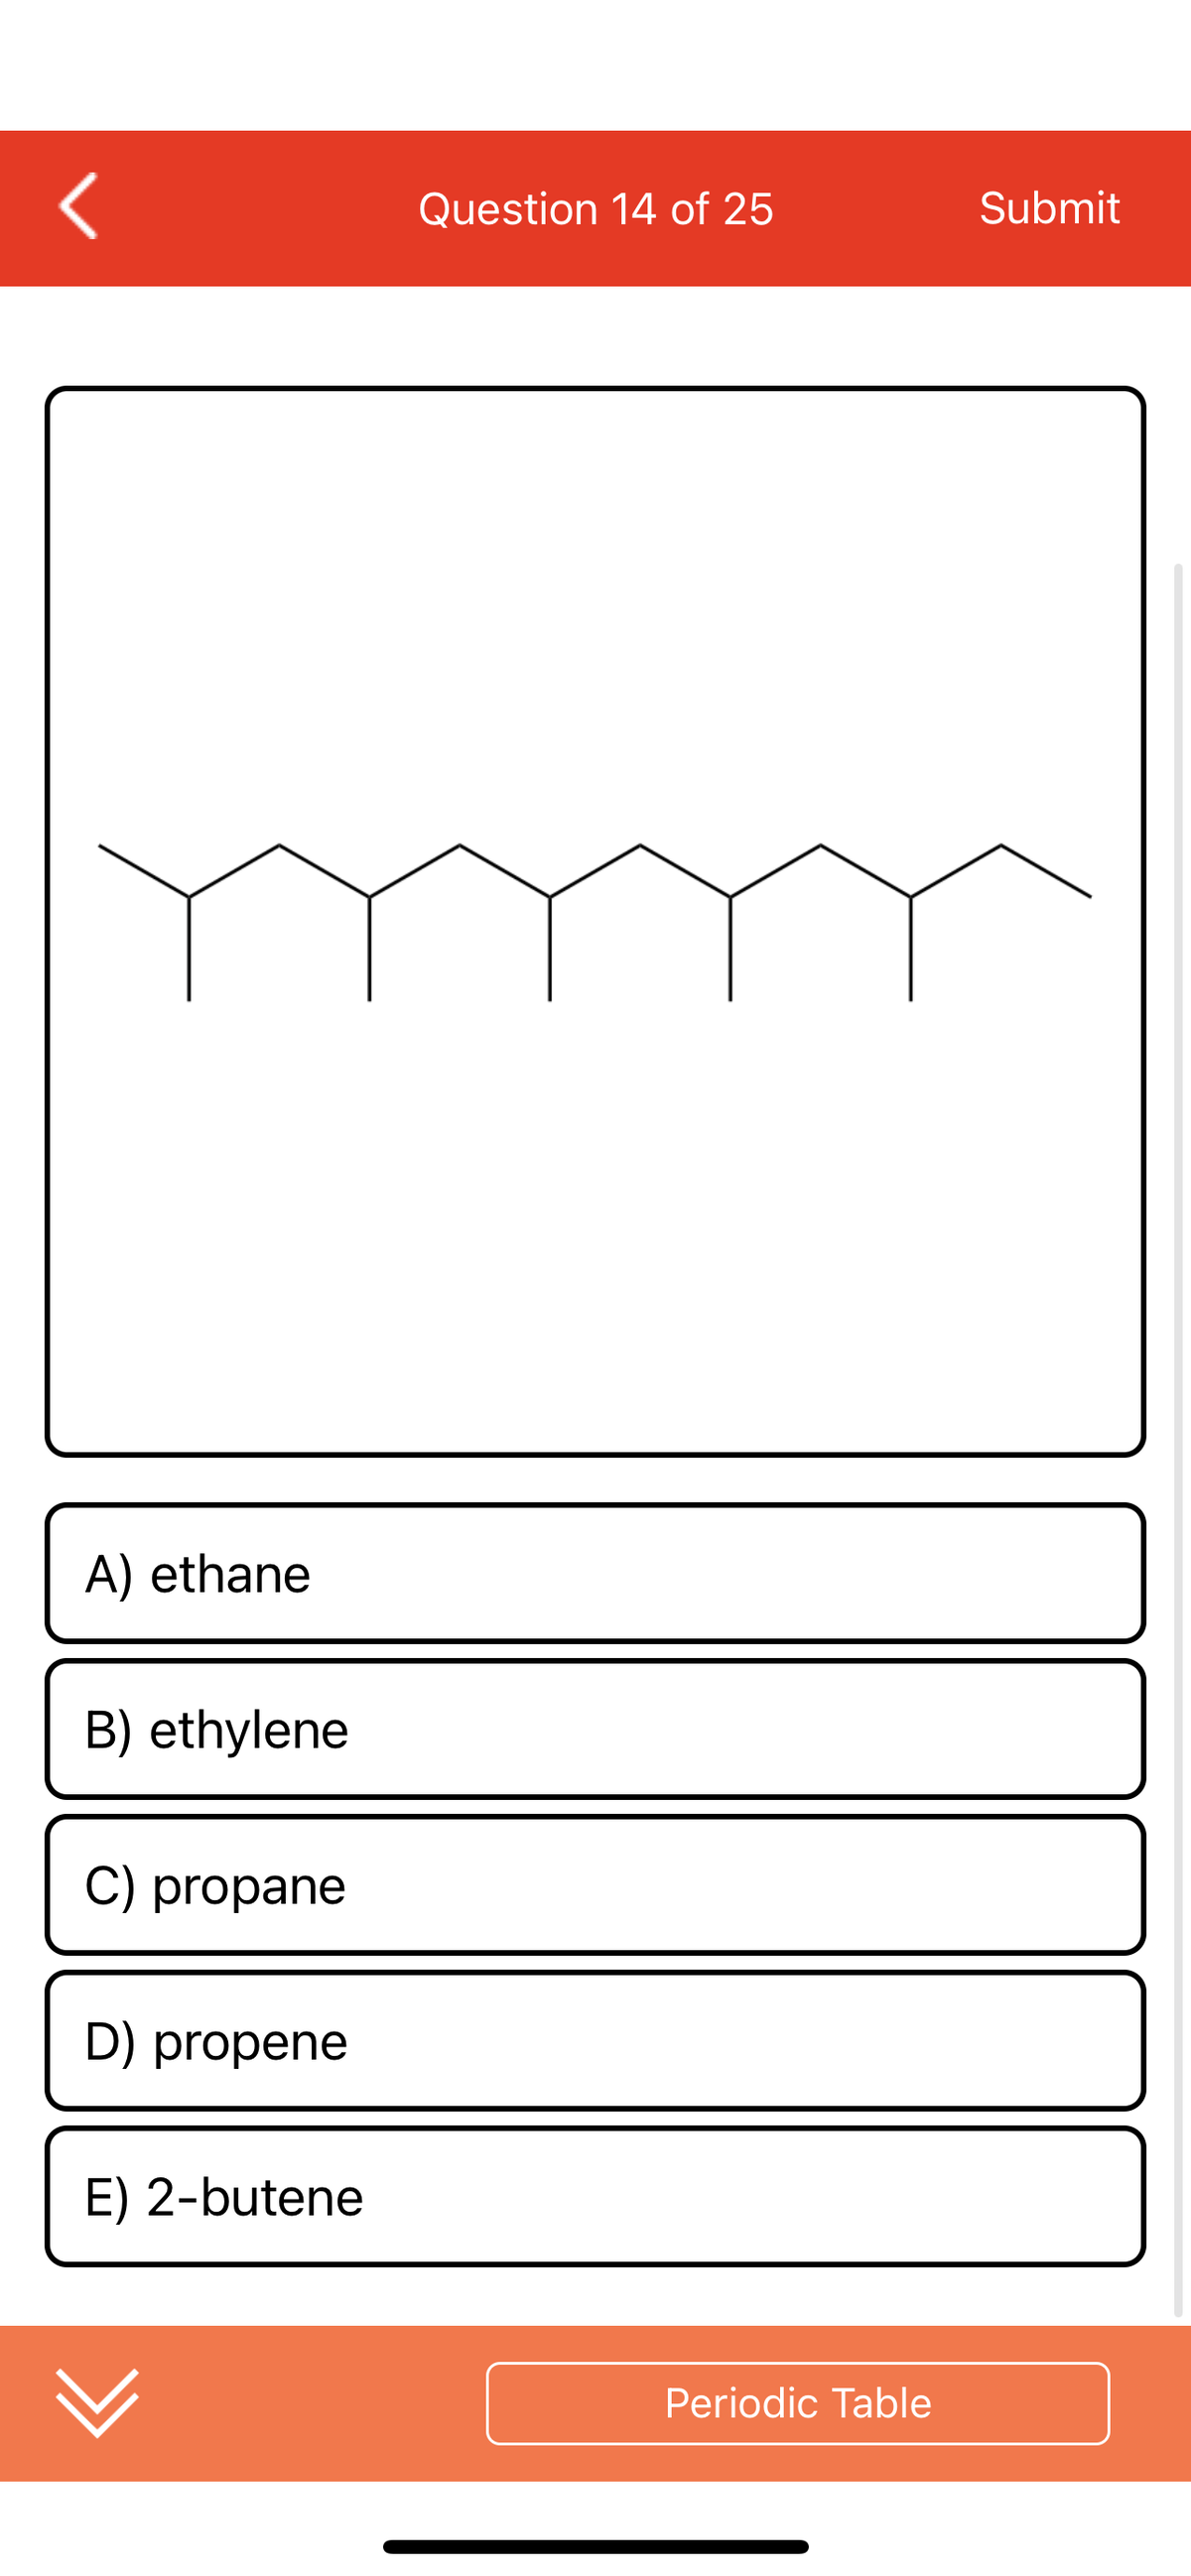 <
A) ethane
B) ethylene
C) propane
D) propene
E) 2-butene
Question 14 of 25
Periodic Table
Submit